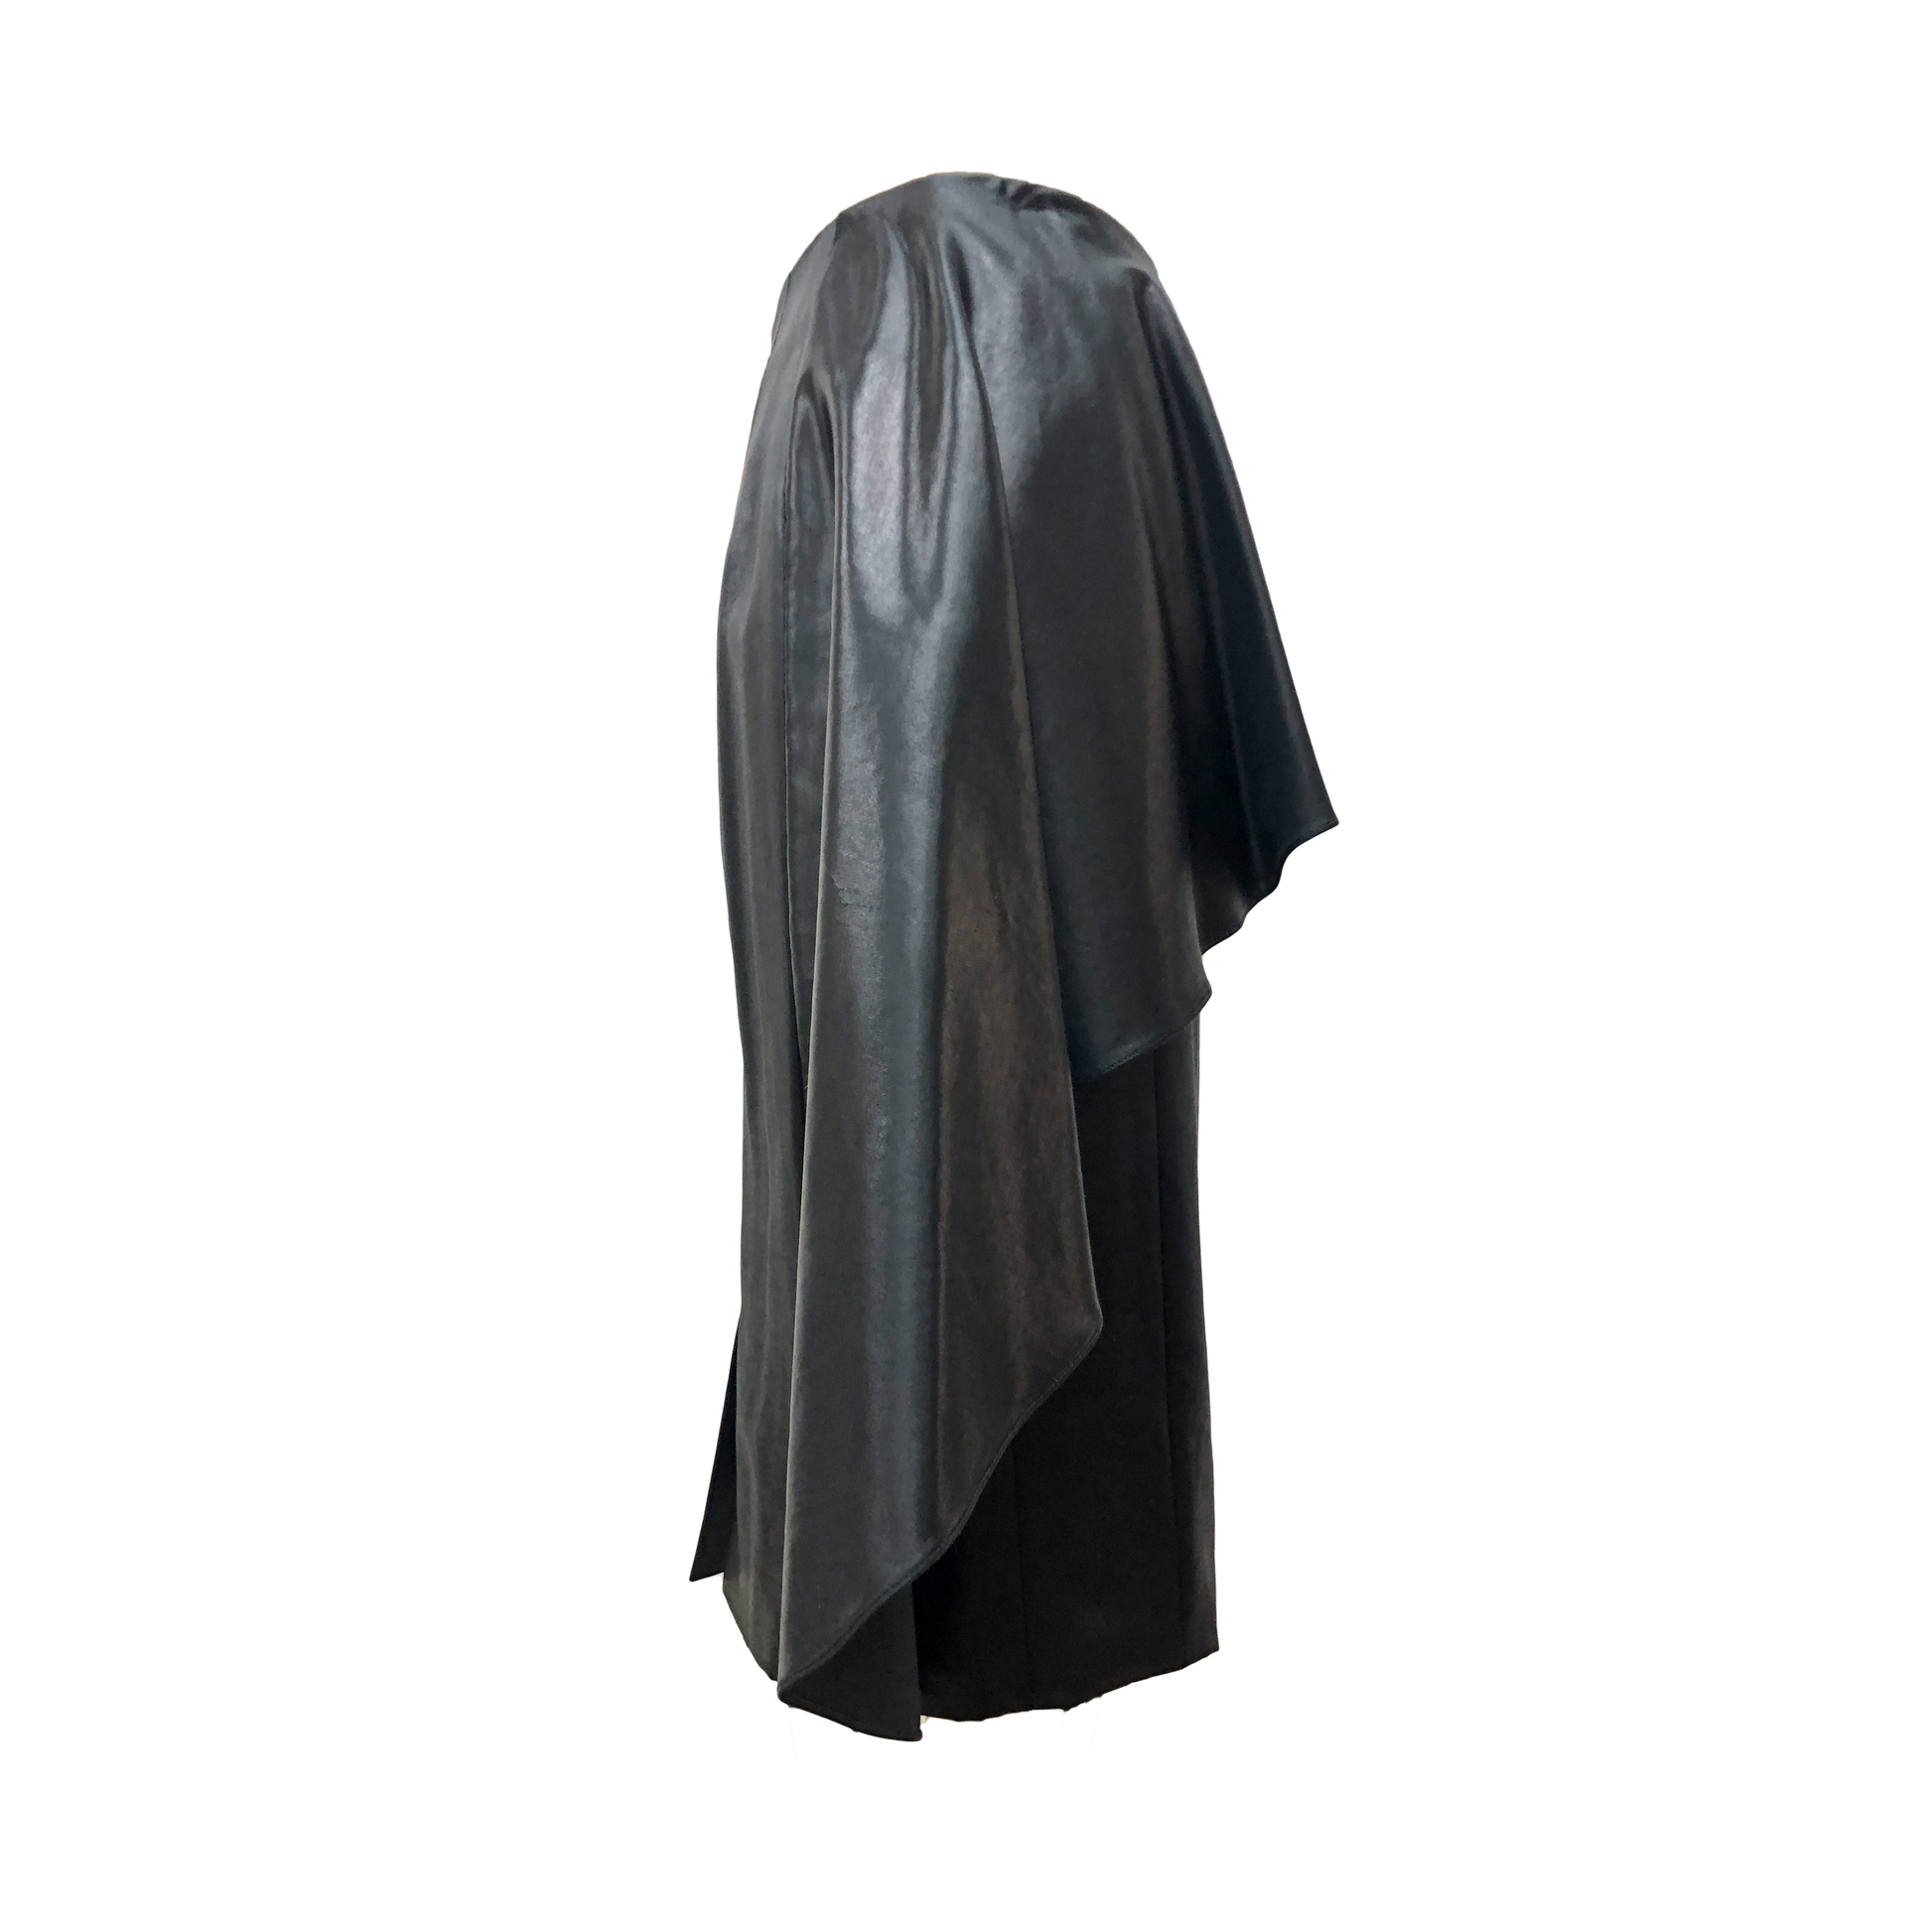 Shiny black cotton viscose pencil skirt with an asymmetric side flounce